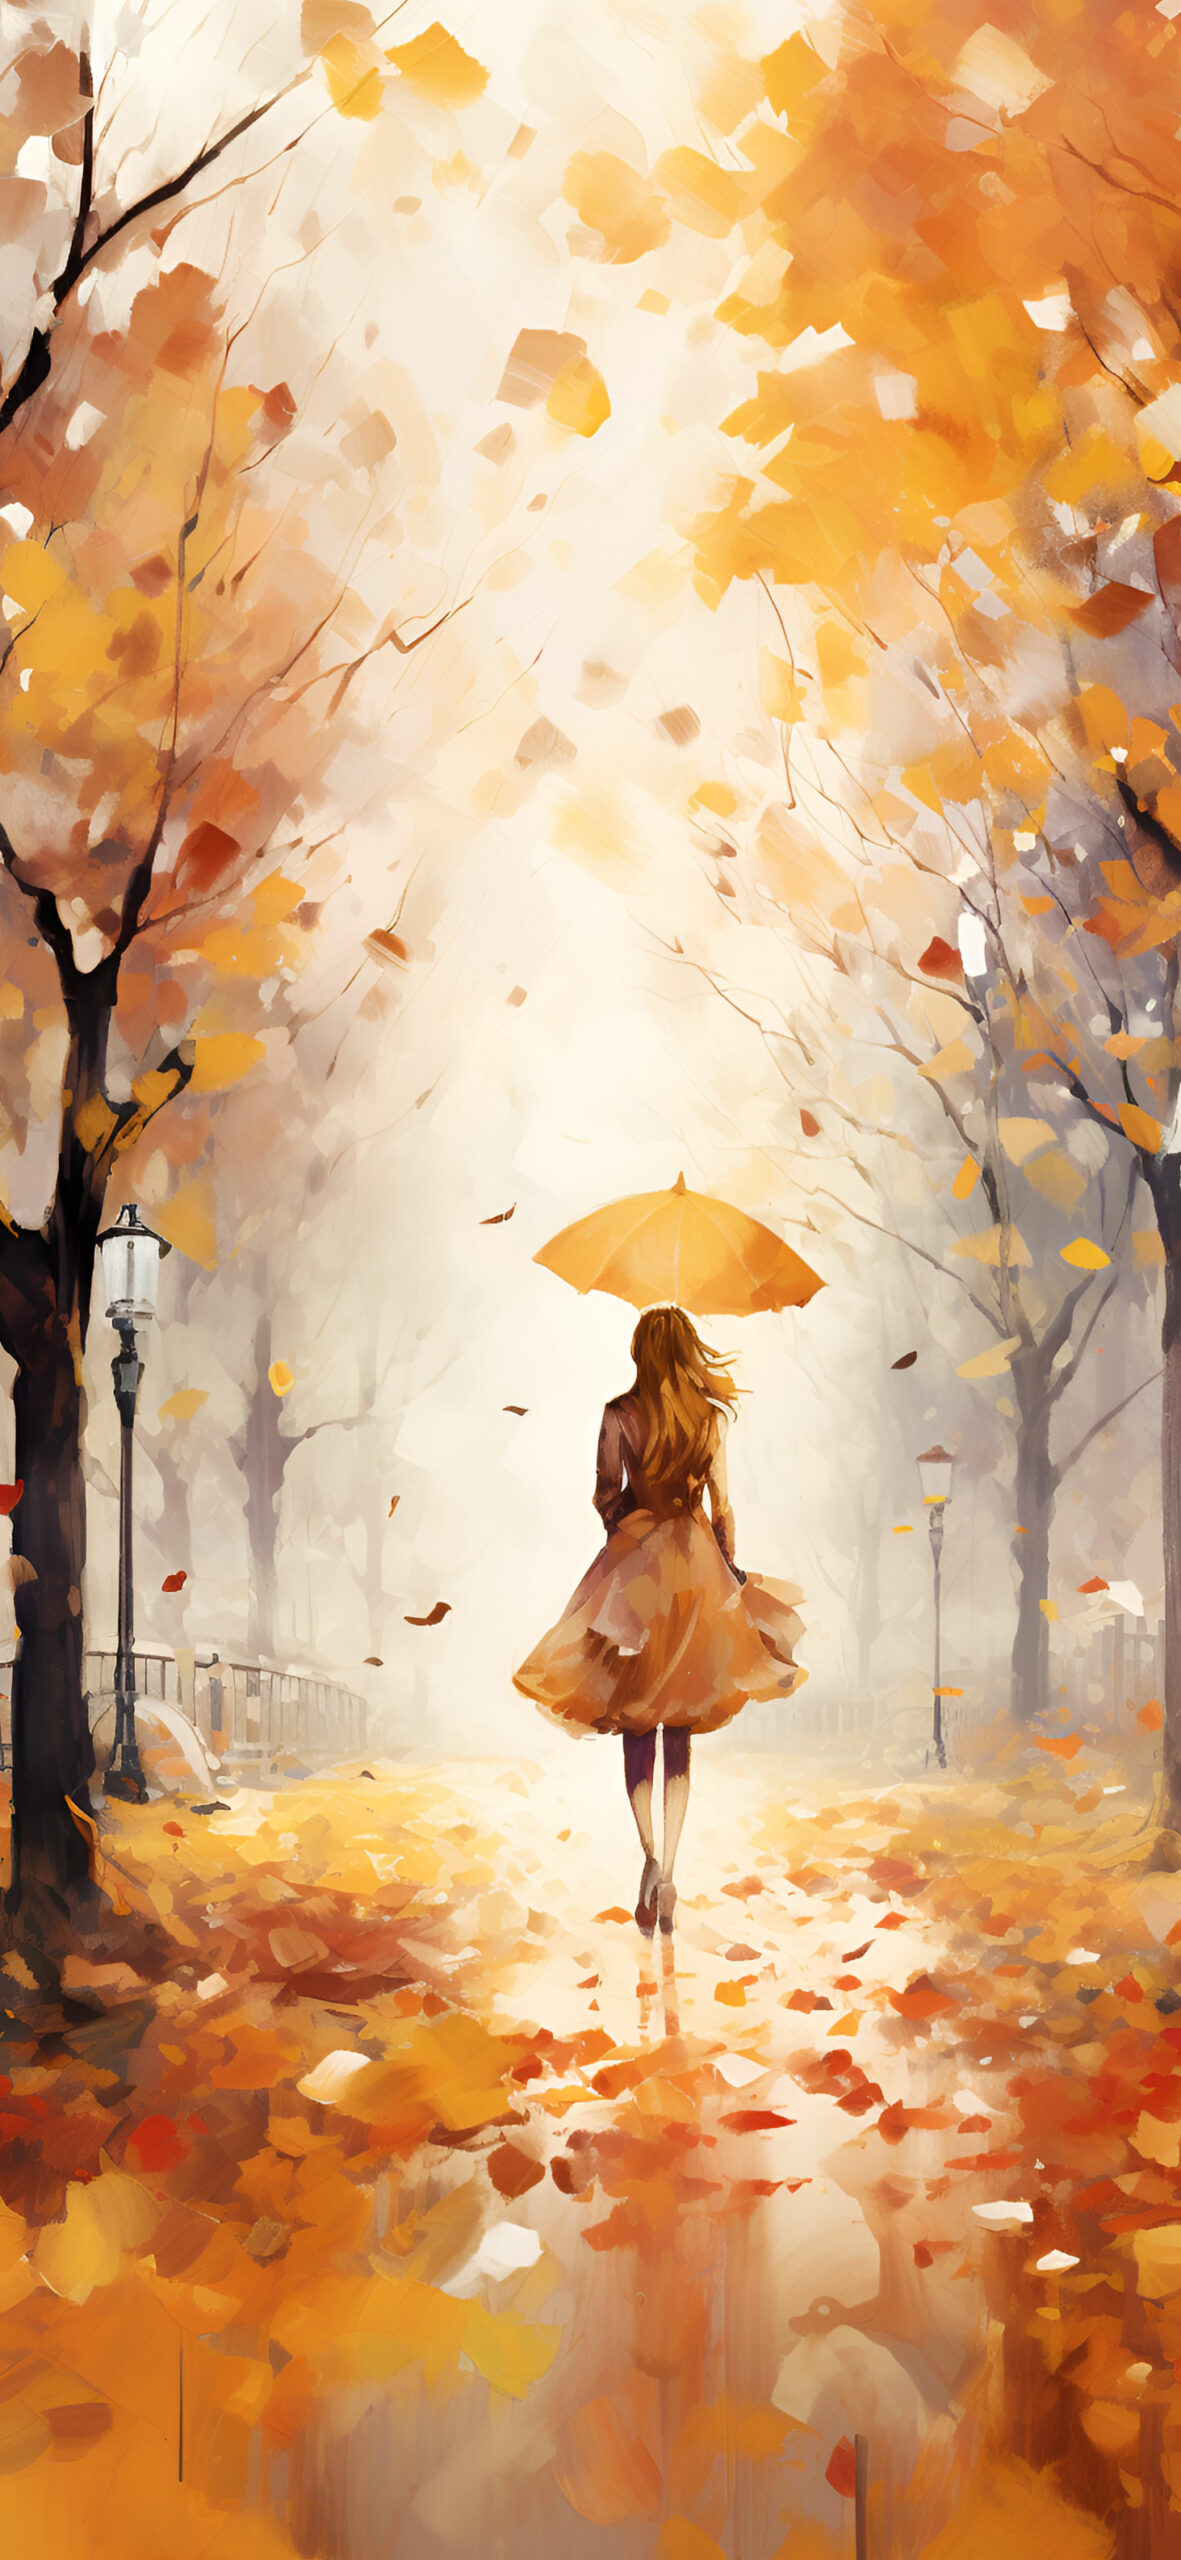 Girl under the rain watercolor wallpaper Fall rain aesthetic w